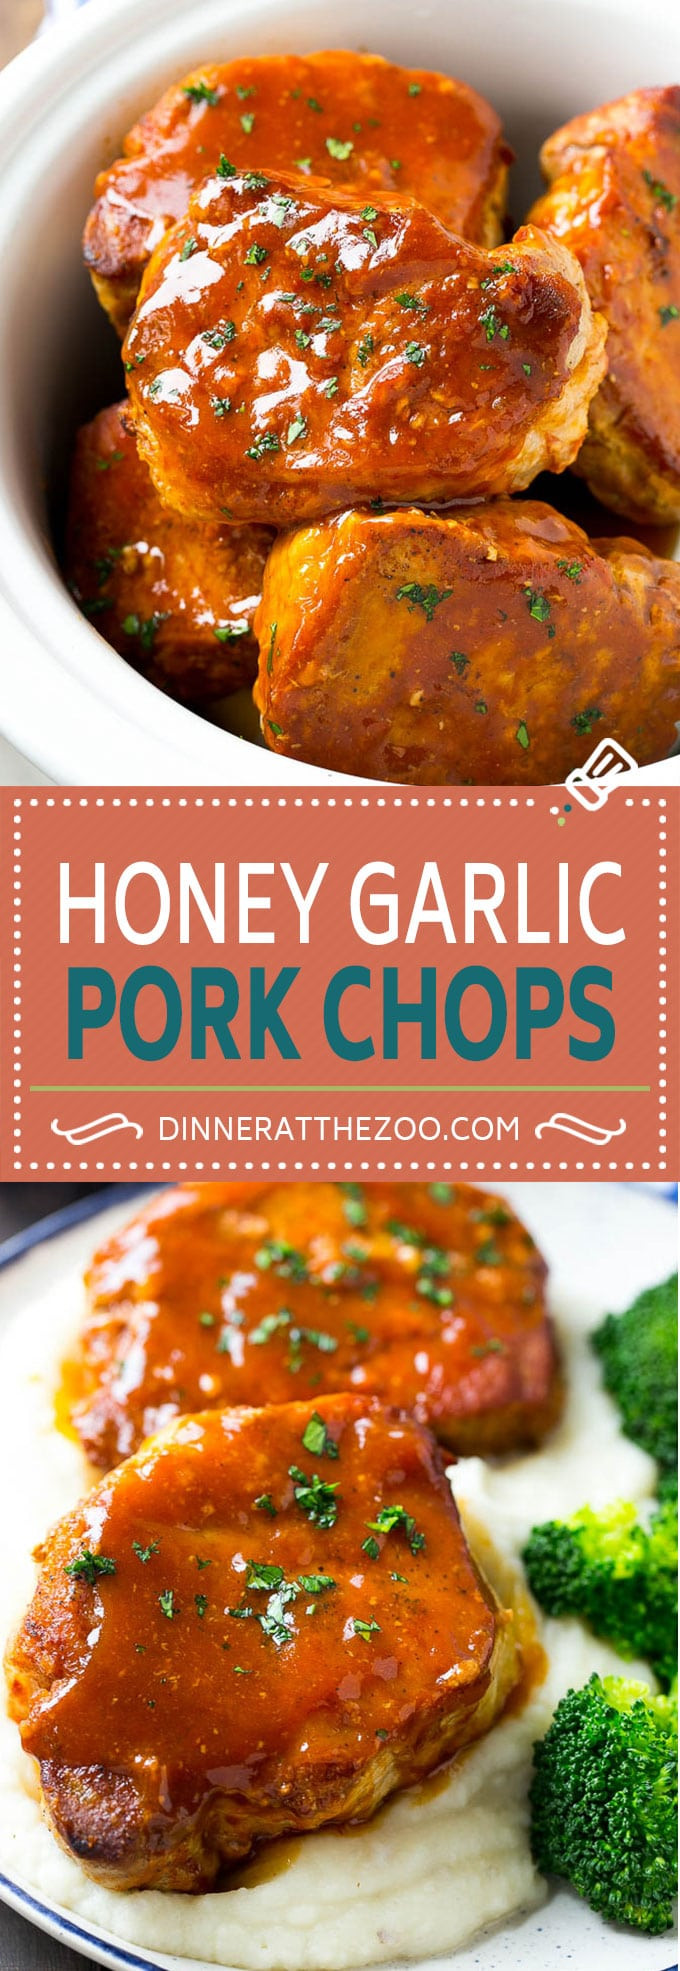 Boneless Pork Chops Crock Pot
 Honey Garlic Pork Chops Slow Cooker Dinner at the Zoo